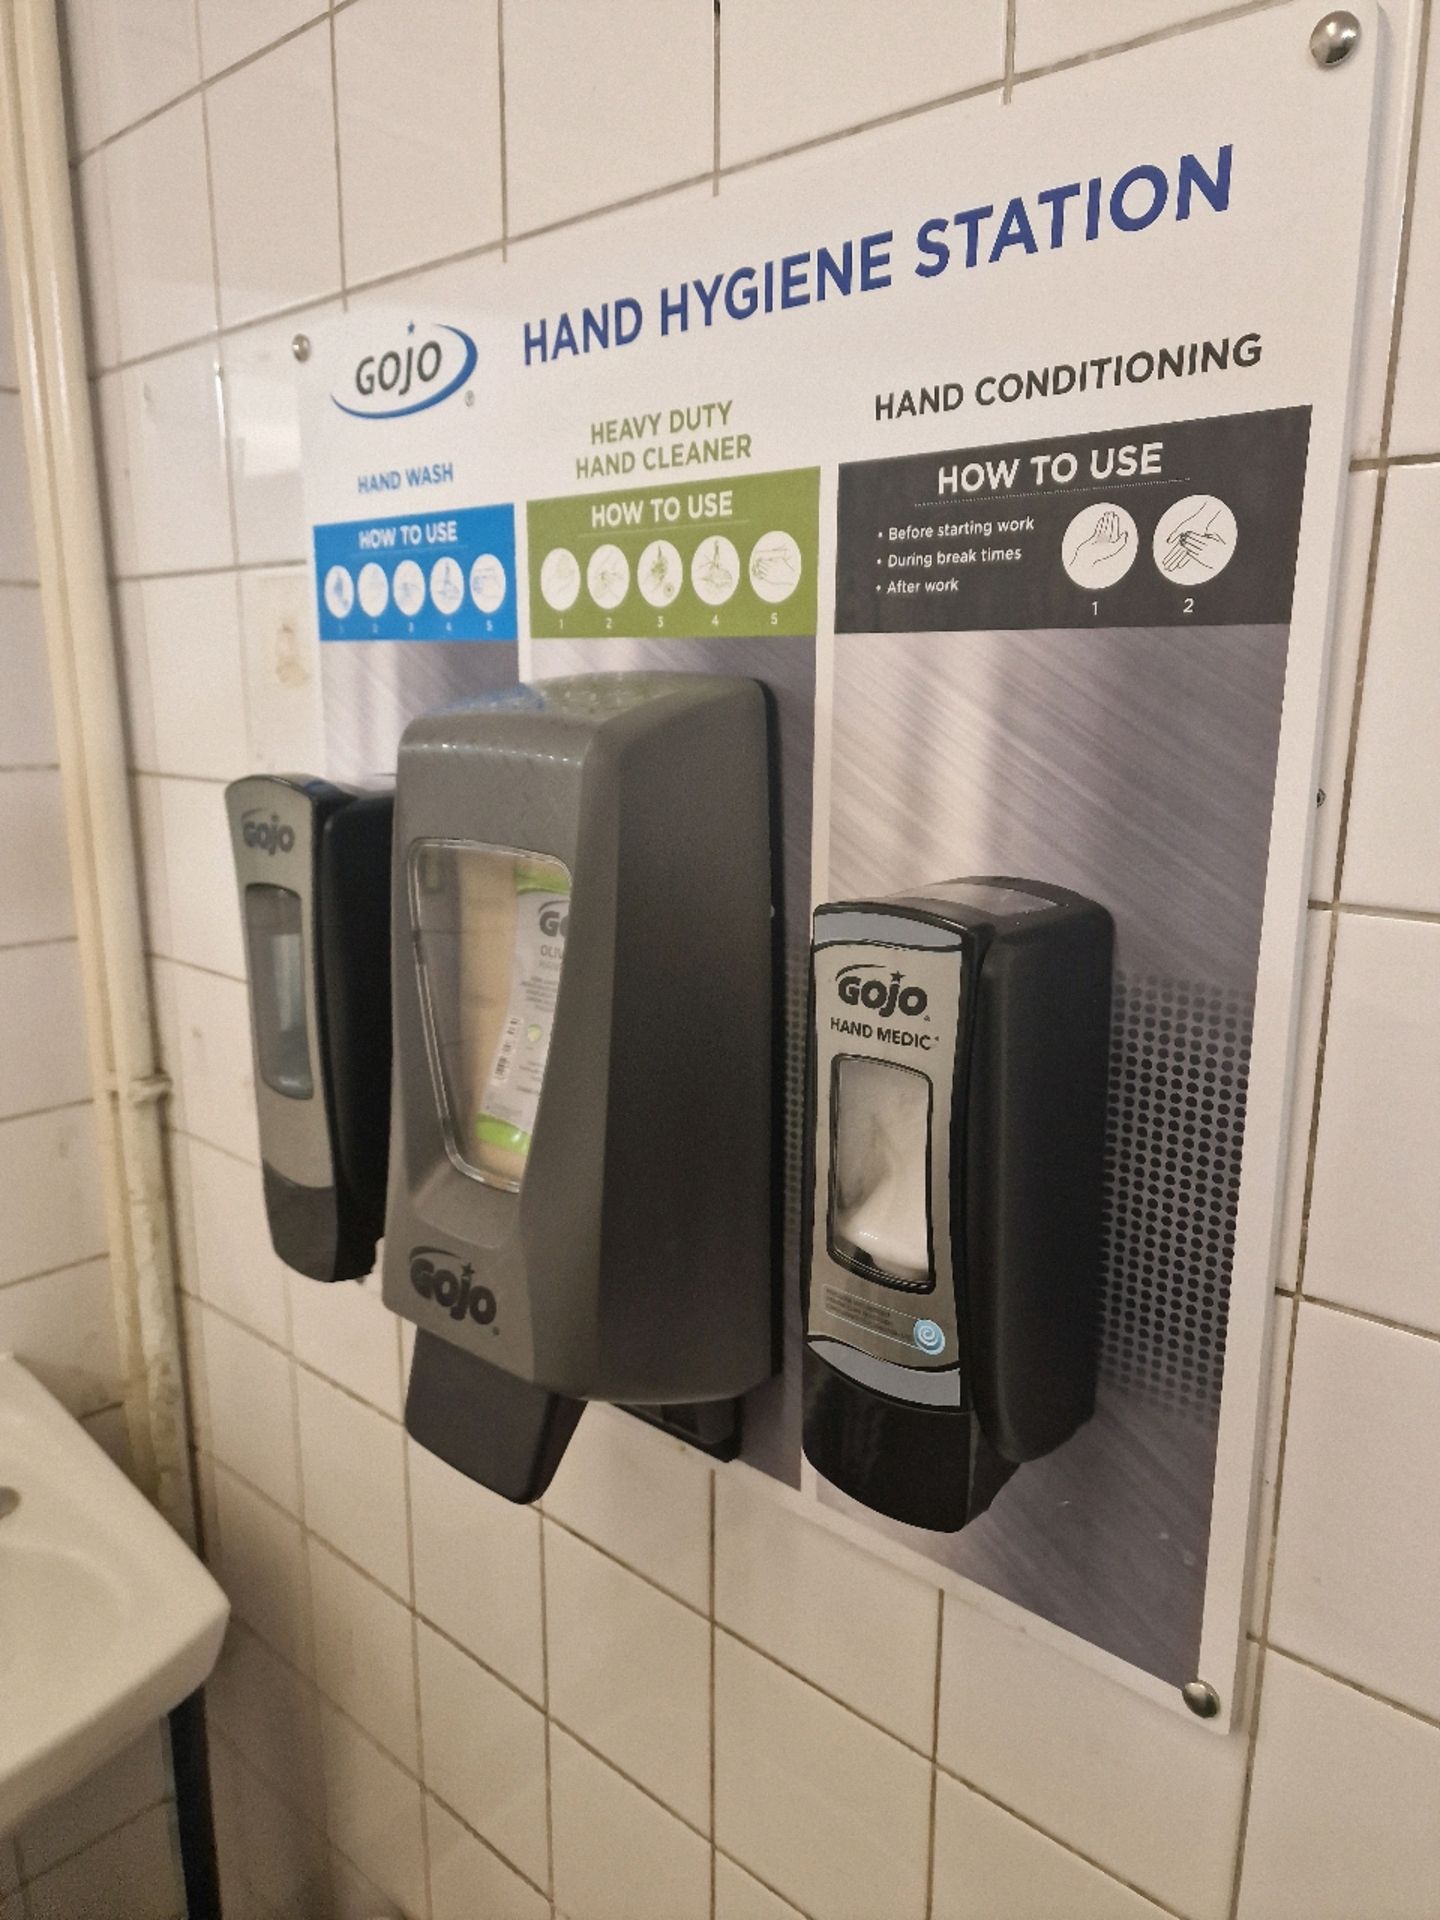 Gojo Hand Hygiene Station - Image 2 of 2